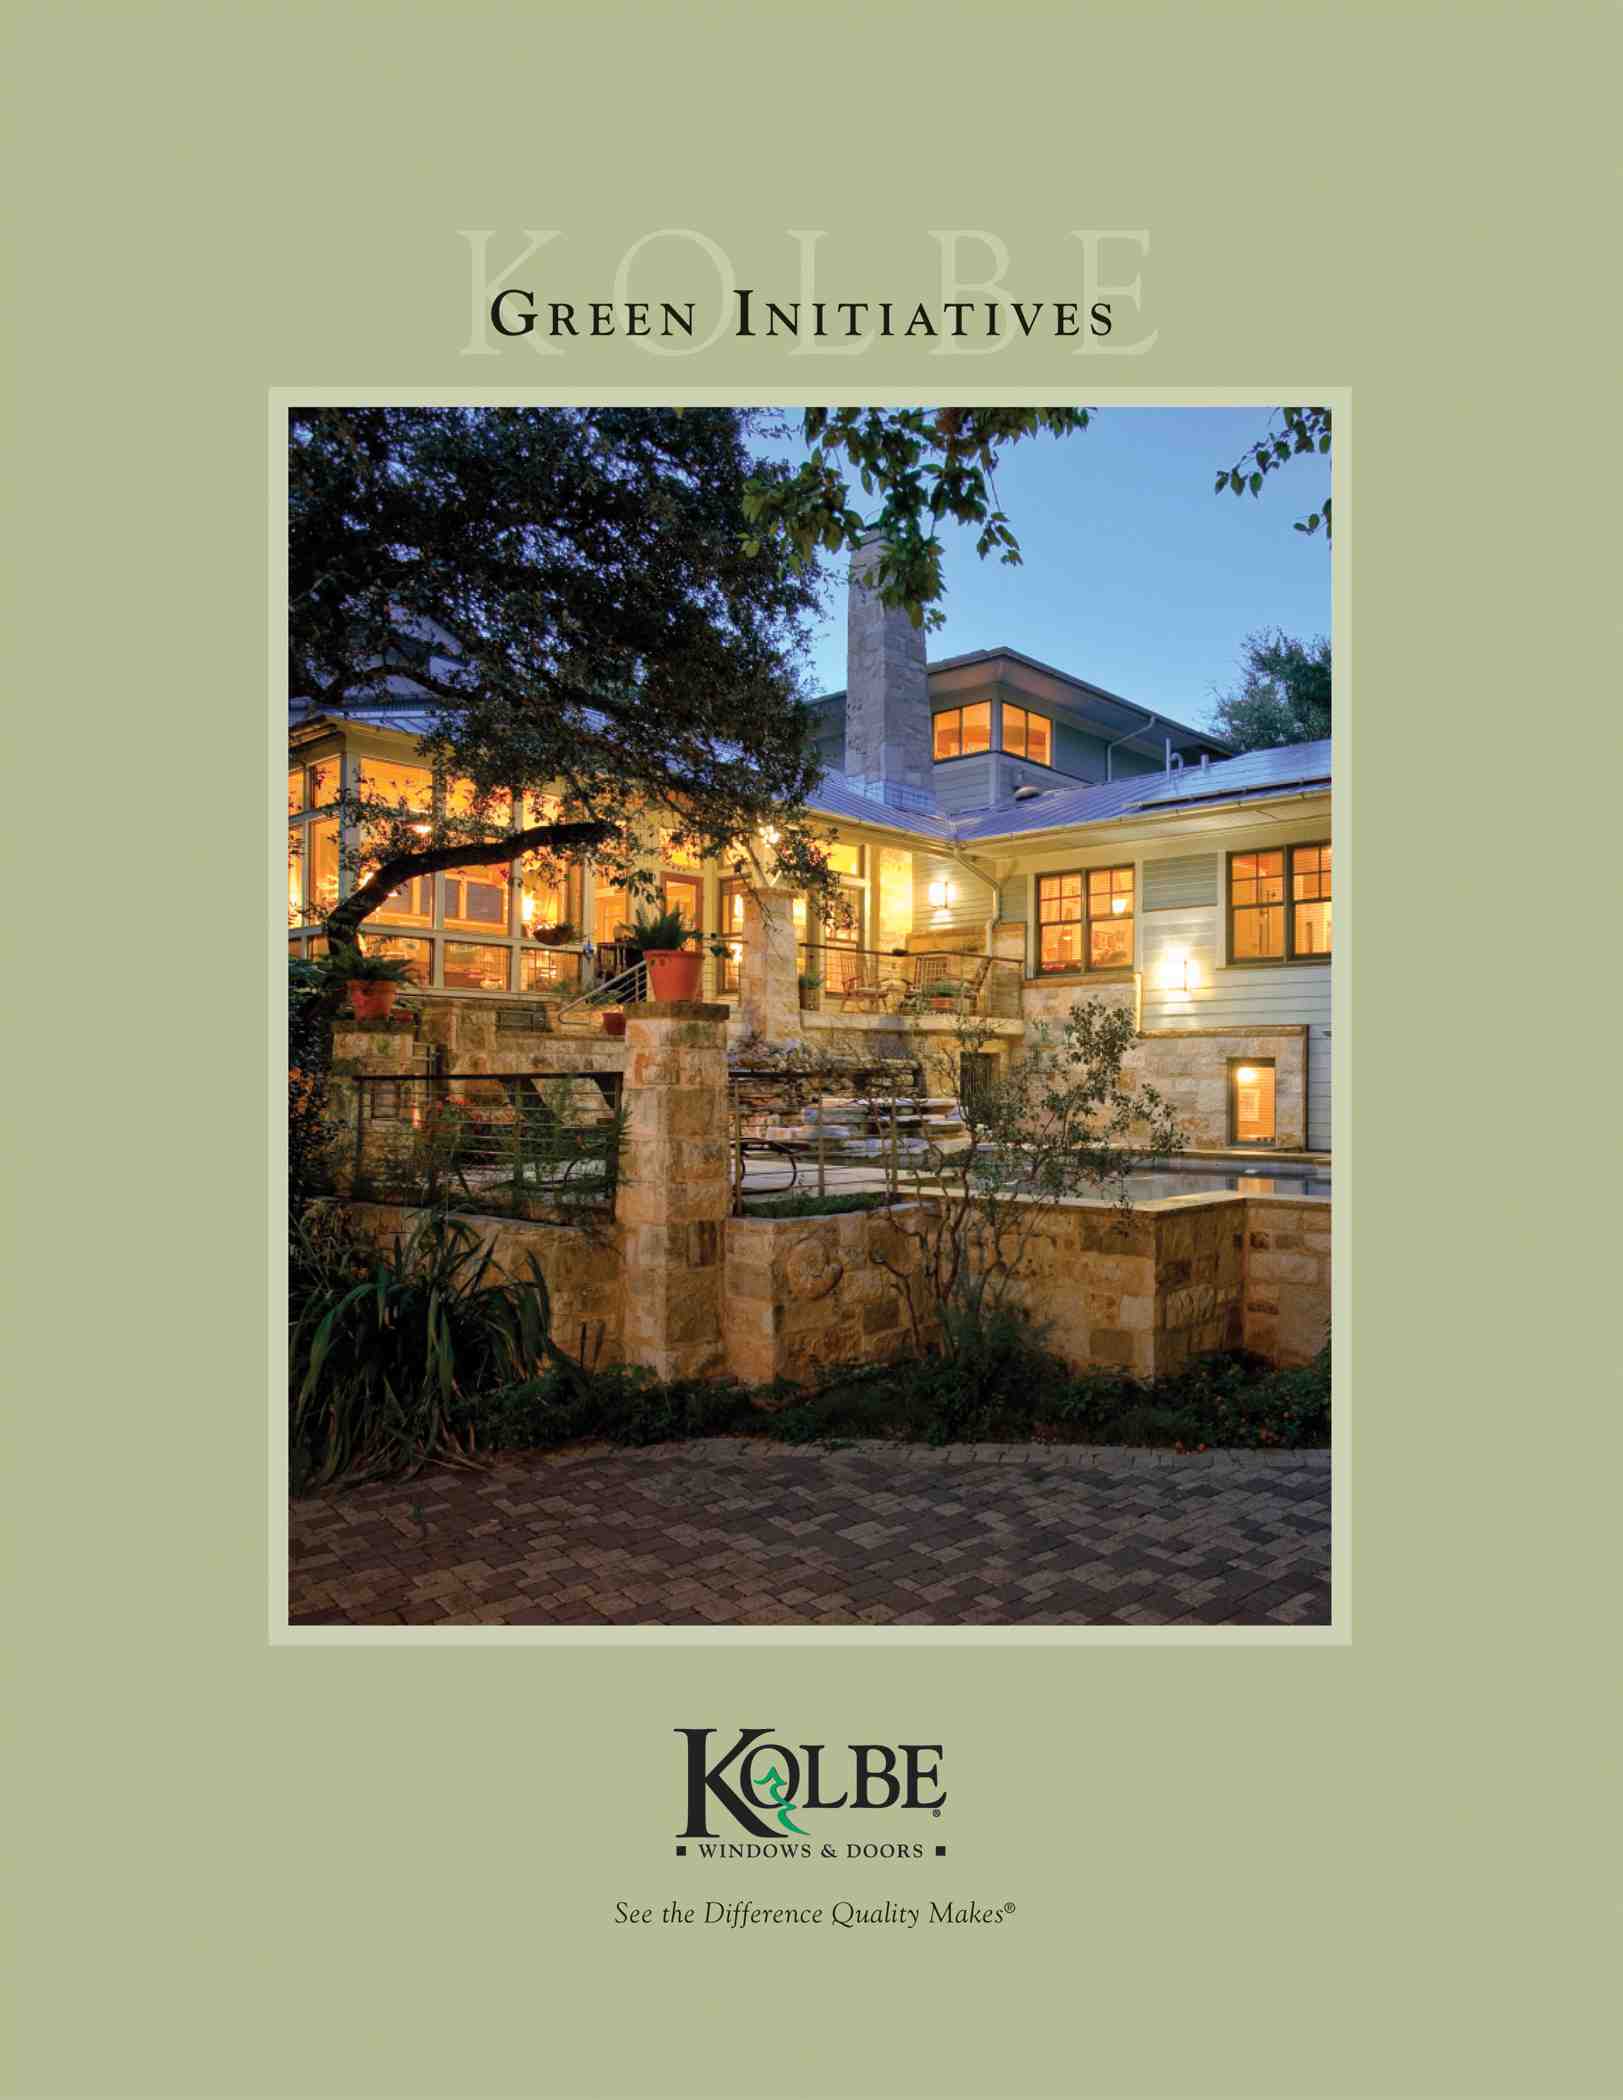 Kolbe's Green Initiatives